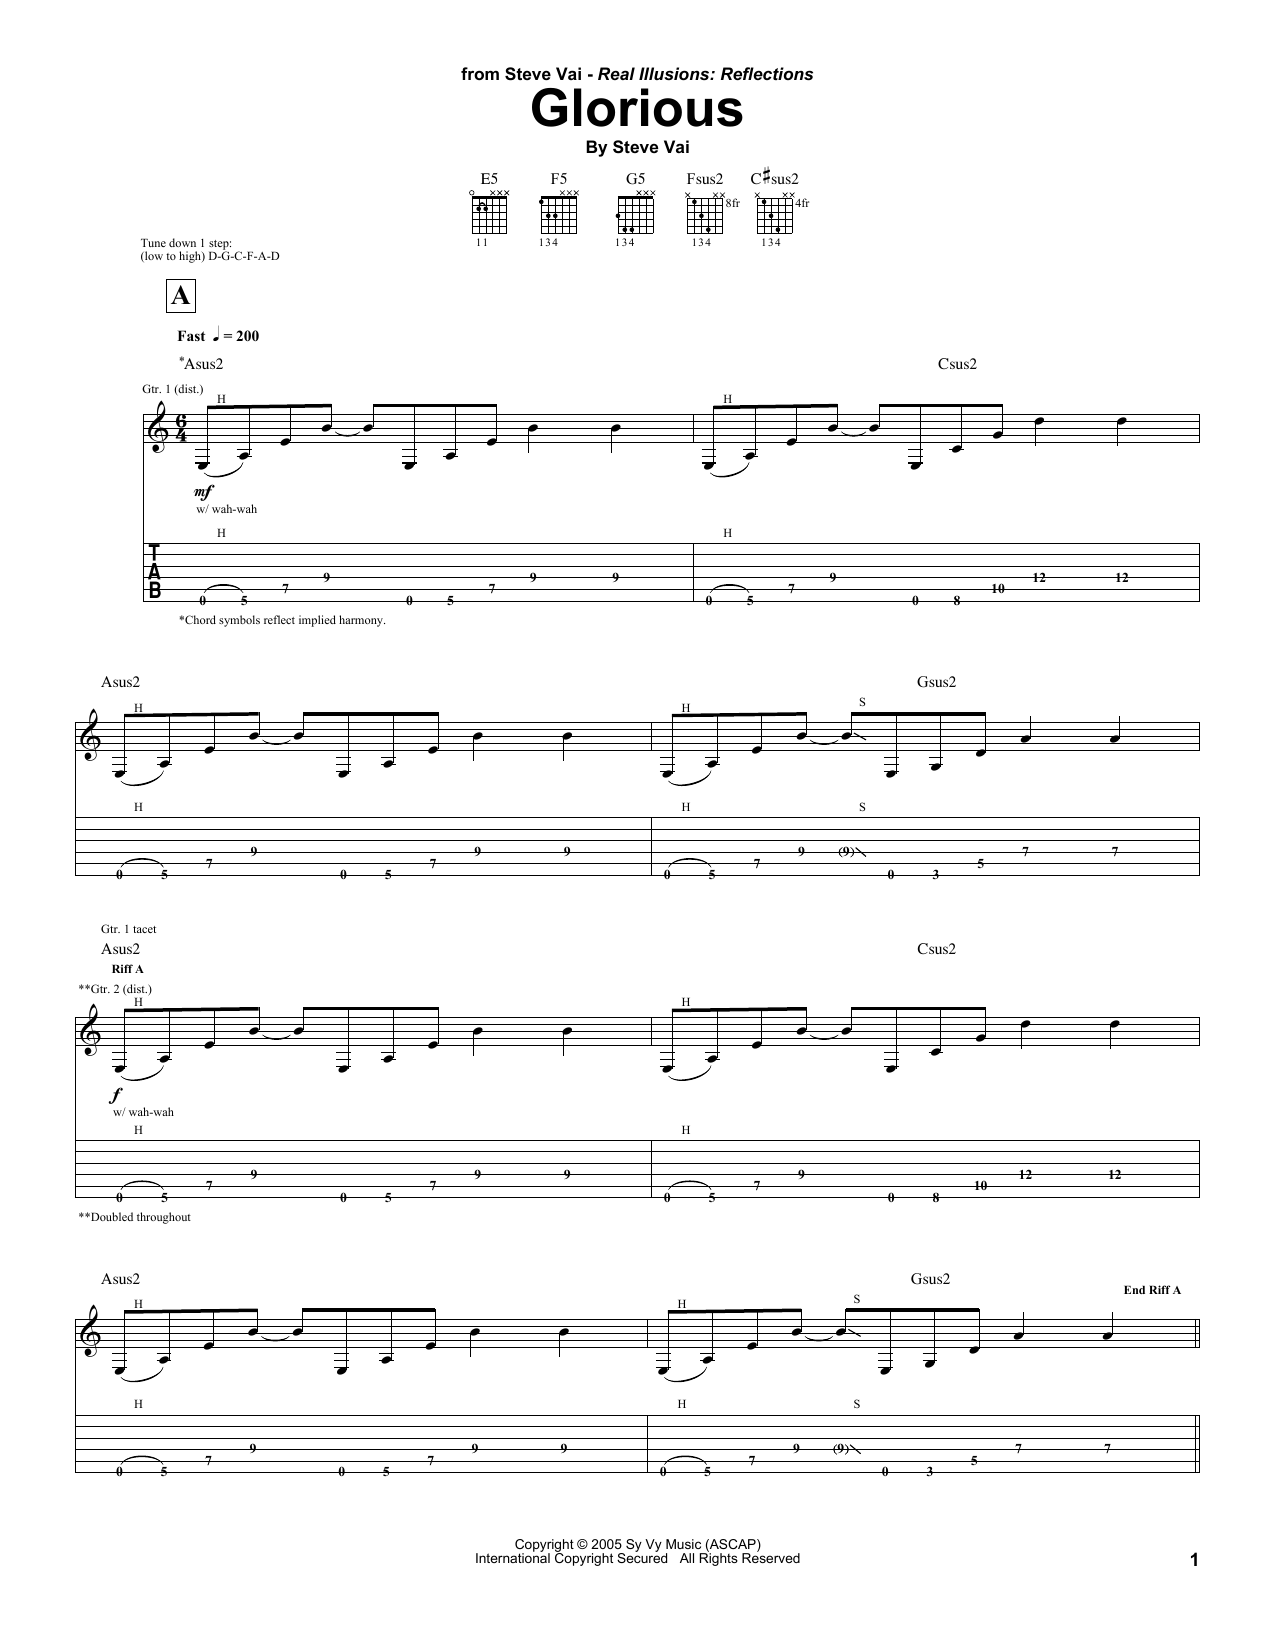 Download Steve Vai Glorious Sheet Music